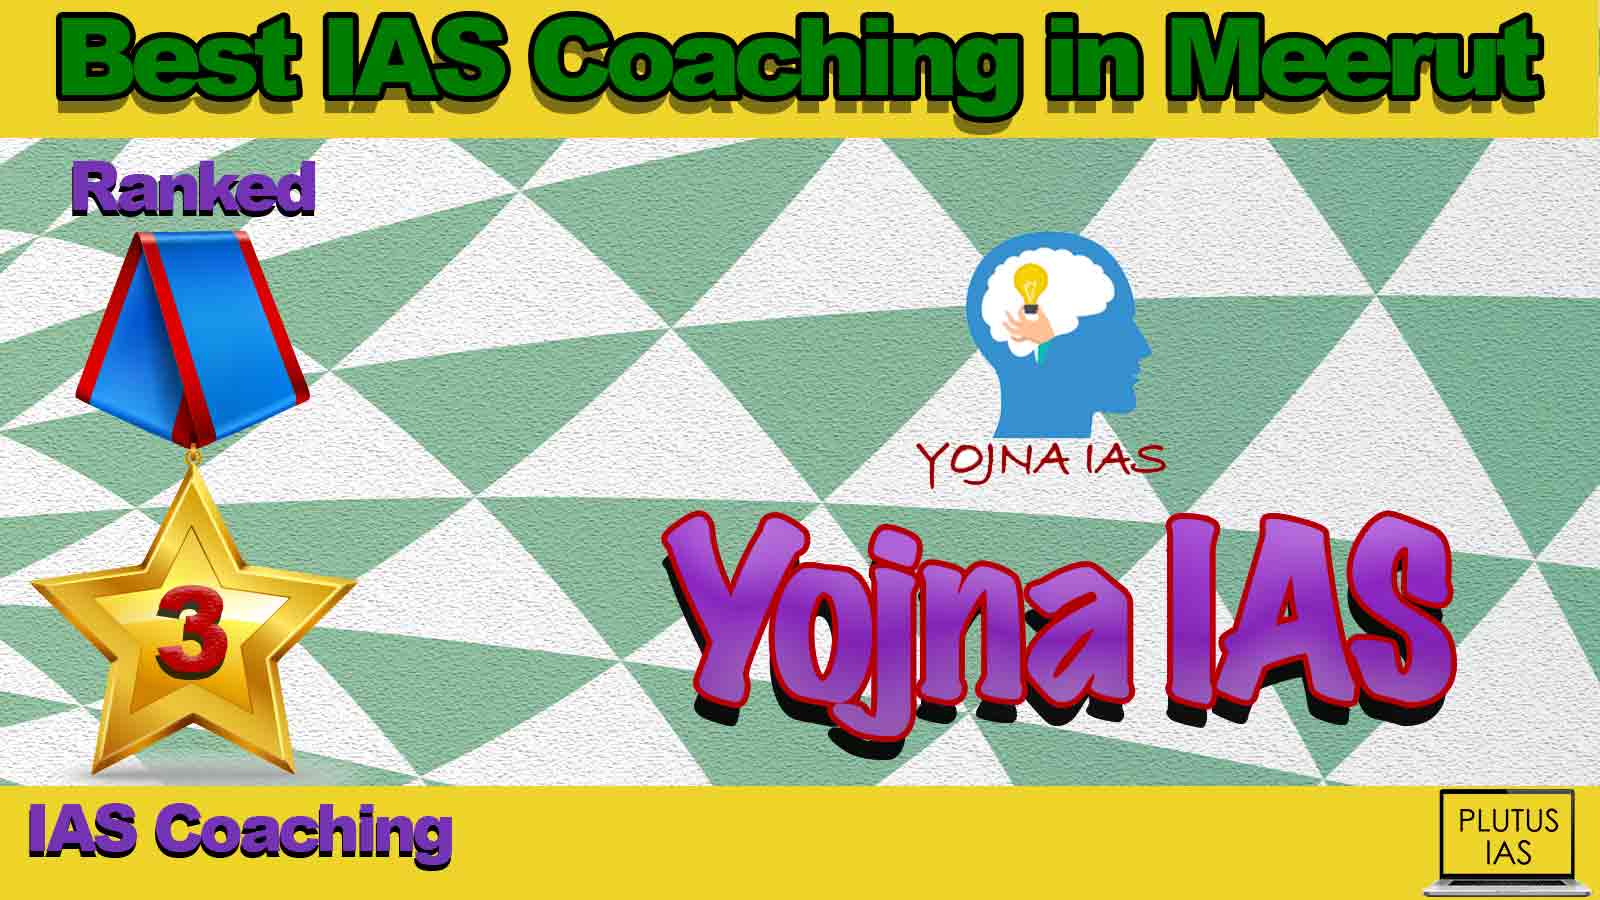 Best IAS Coaching in Meerut